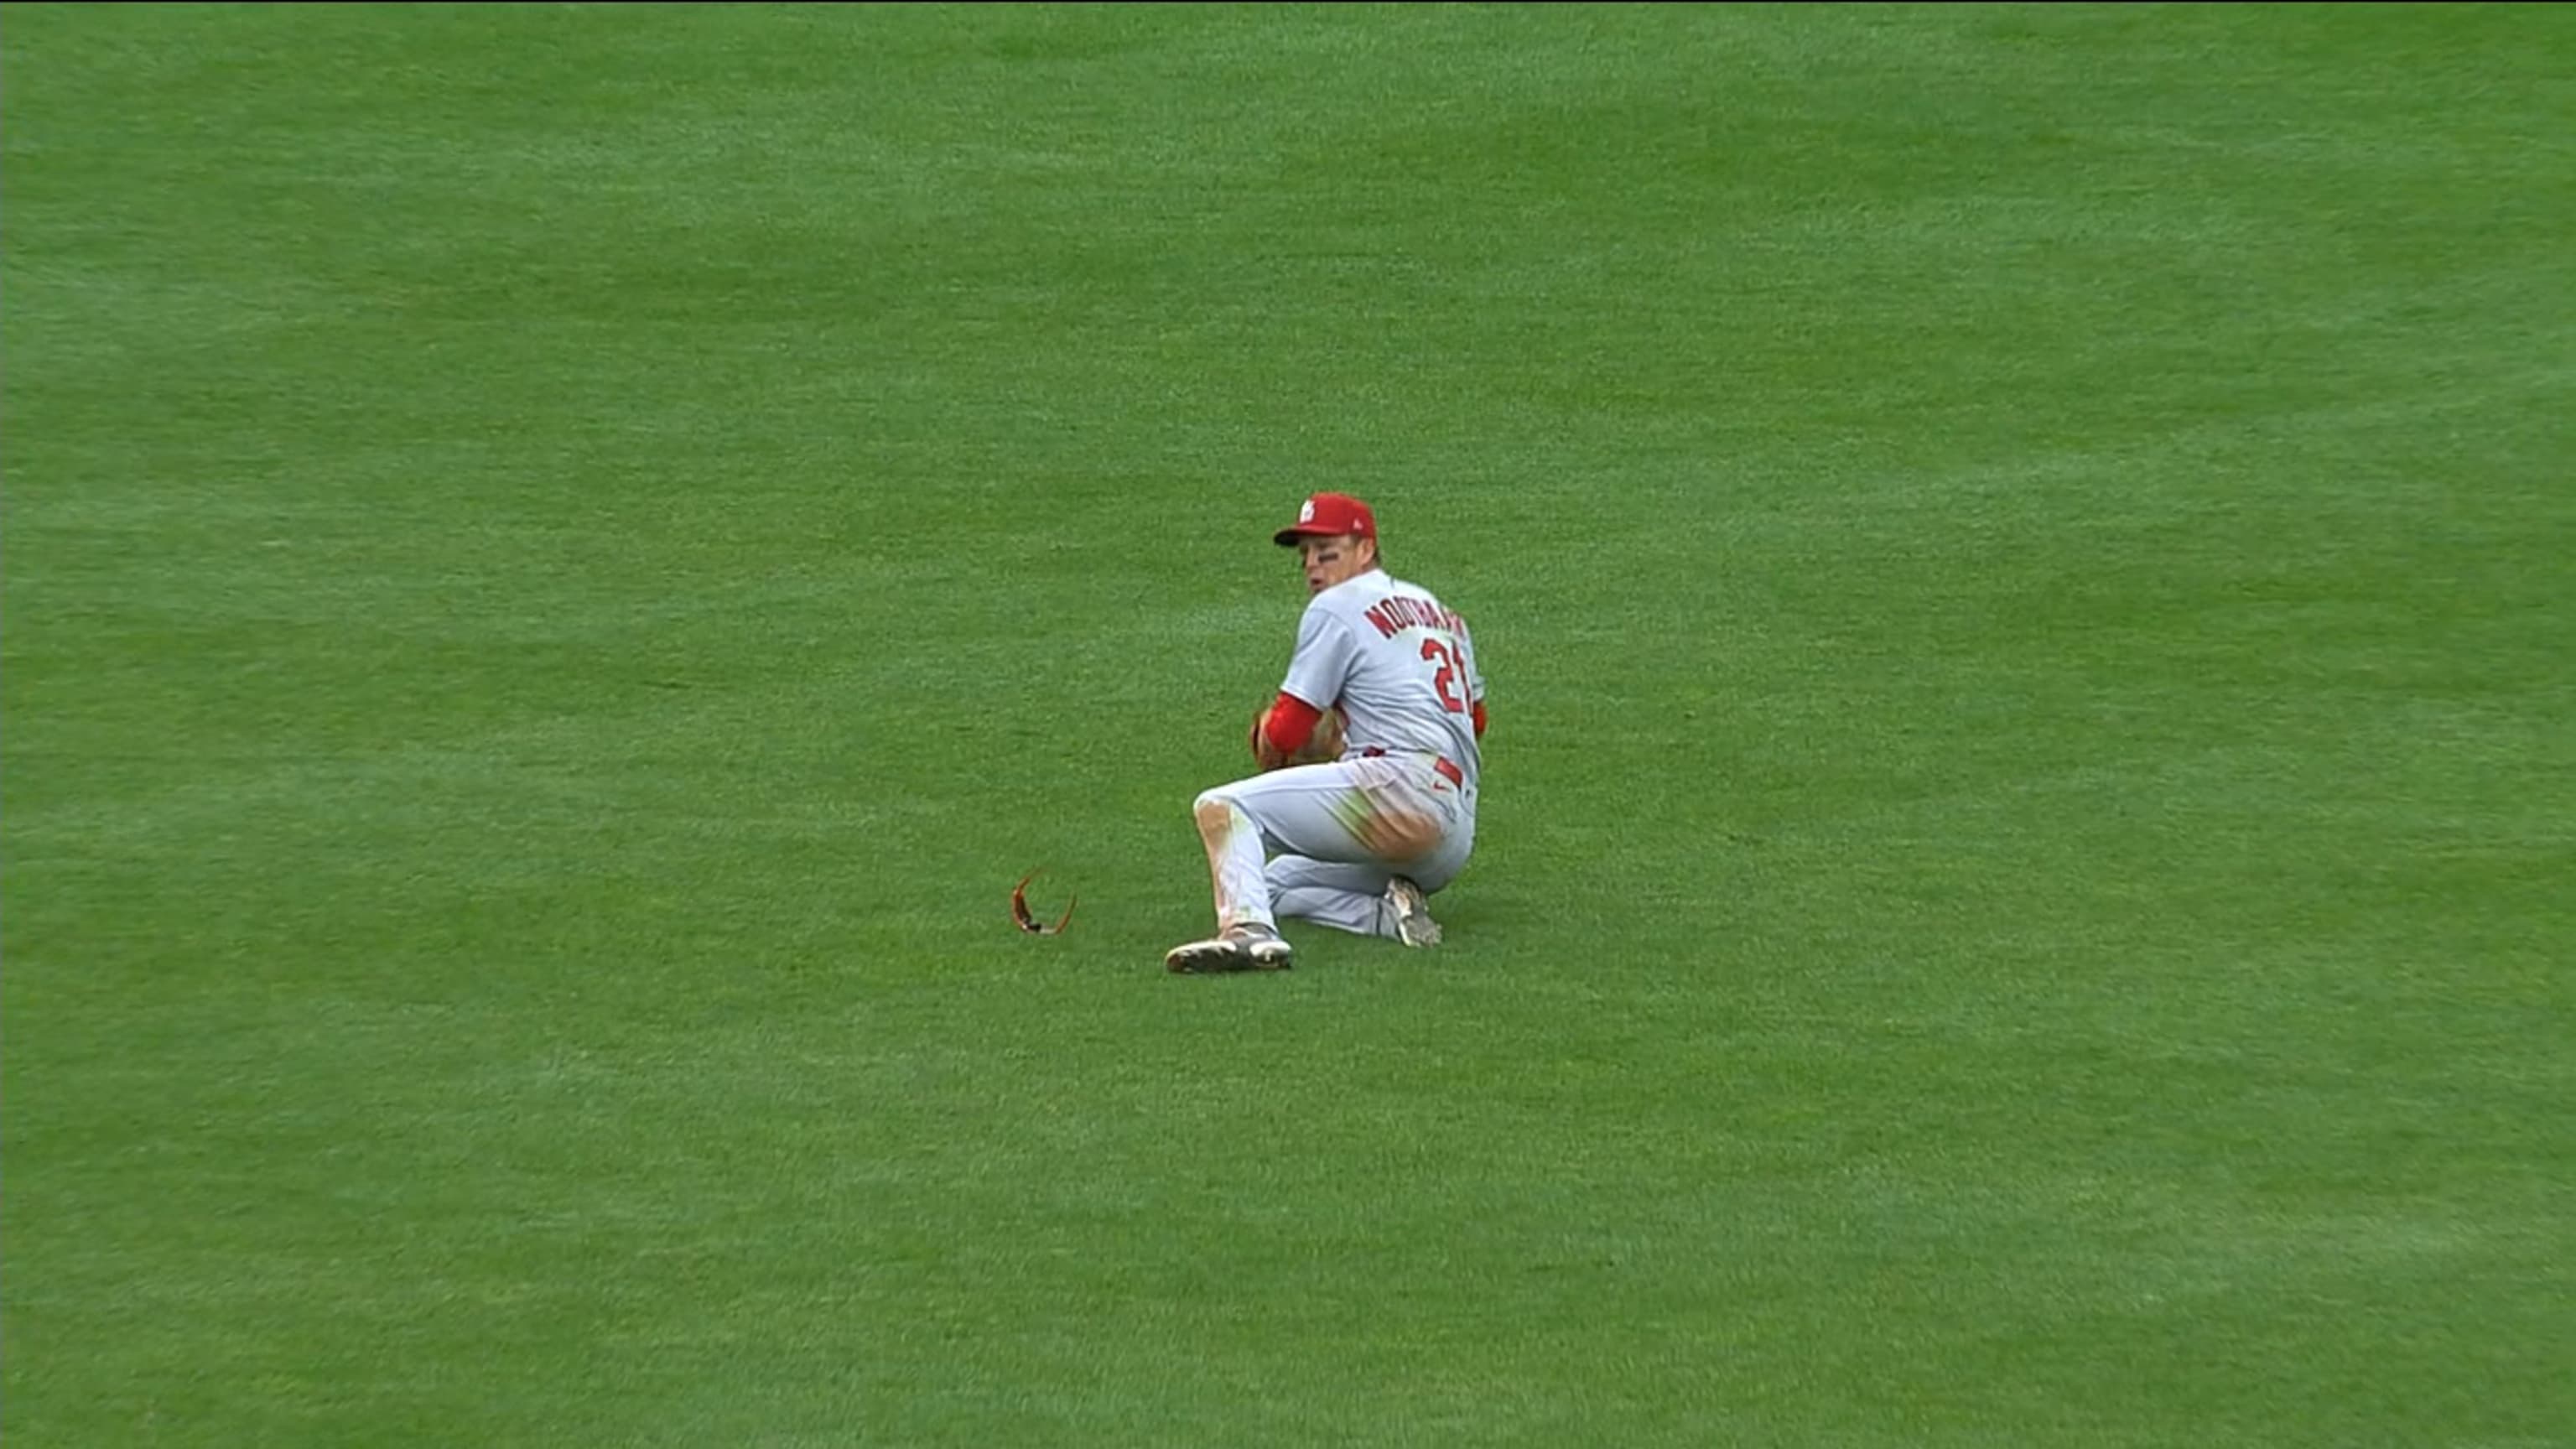 Cardinals' Albert Pujols approaching Yankees' Alex Rodriguez on all-time  home run list 